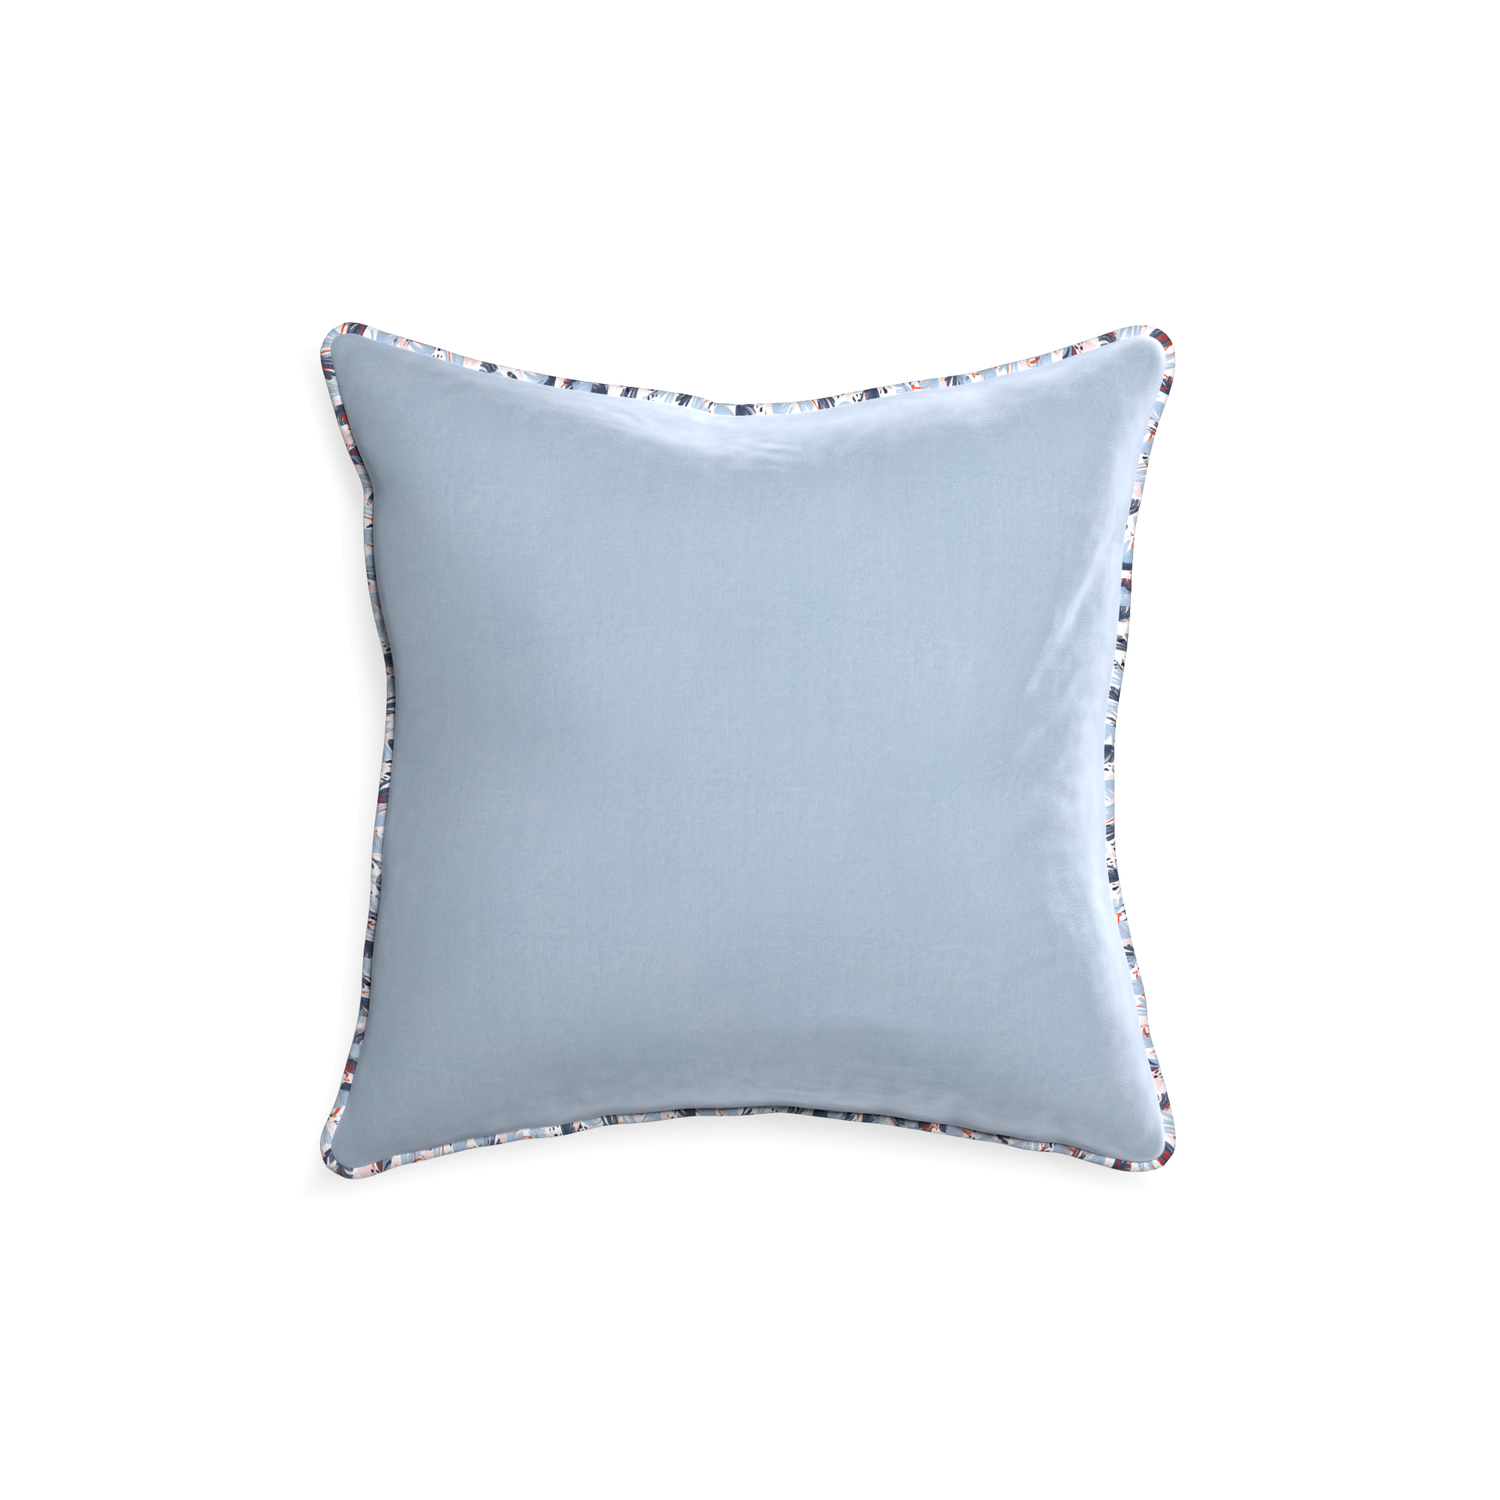 18-square sky velvet custom pillow with e piping on white background